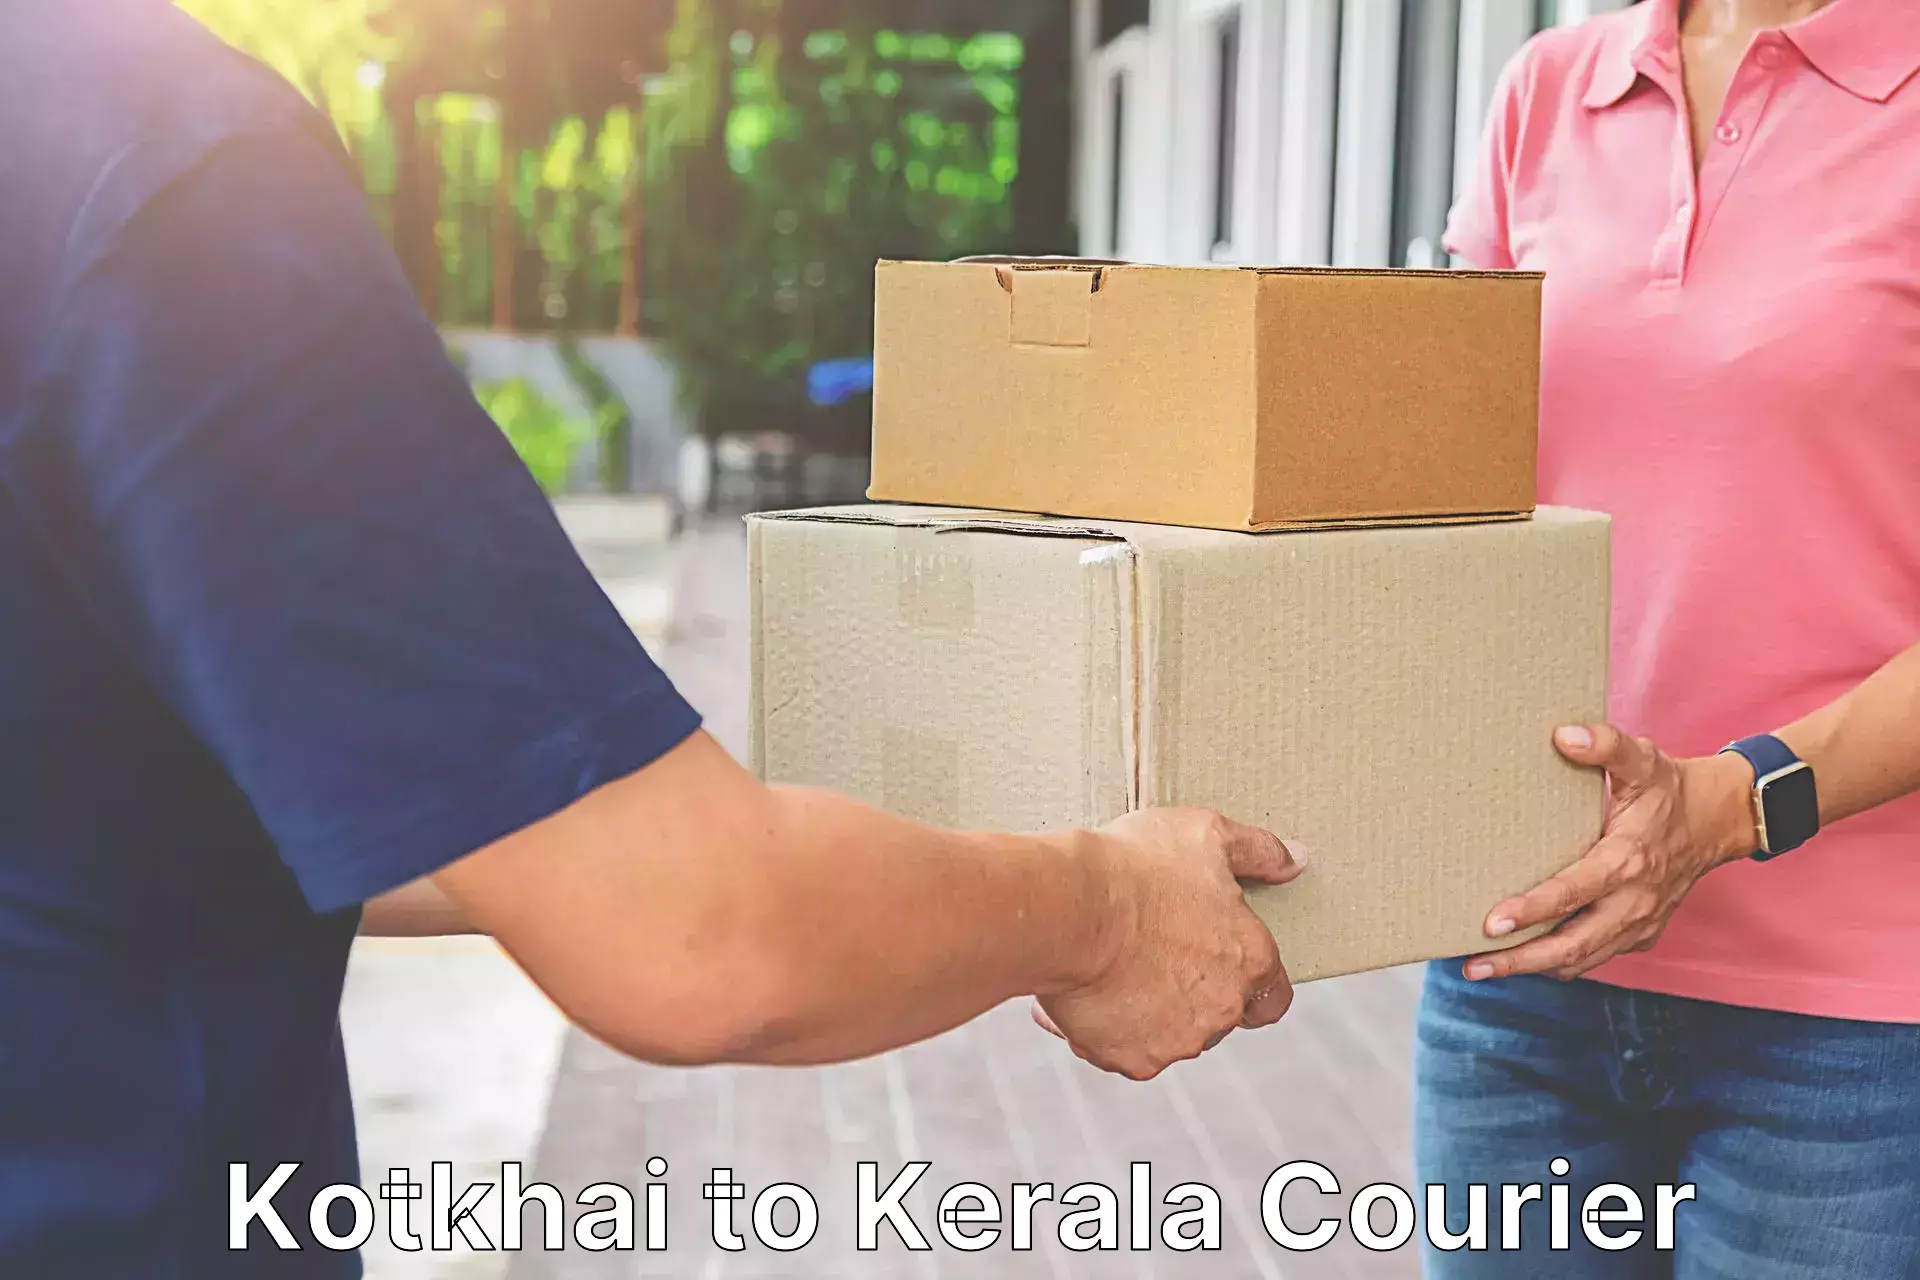 Courier service partnerships Kotkhai to Kerala